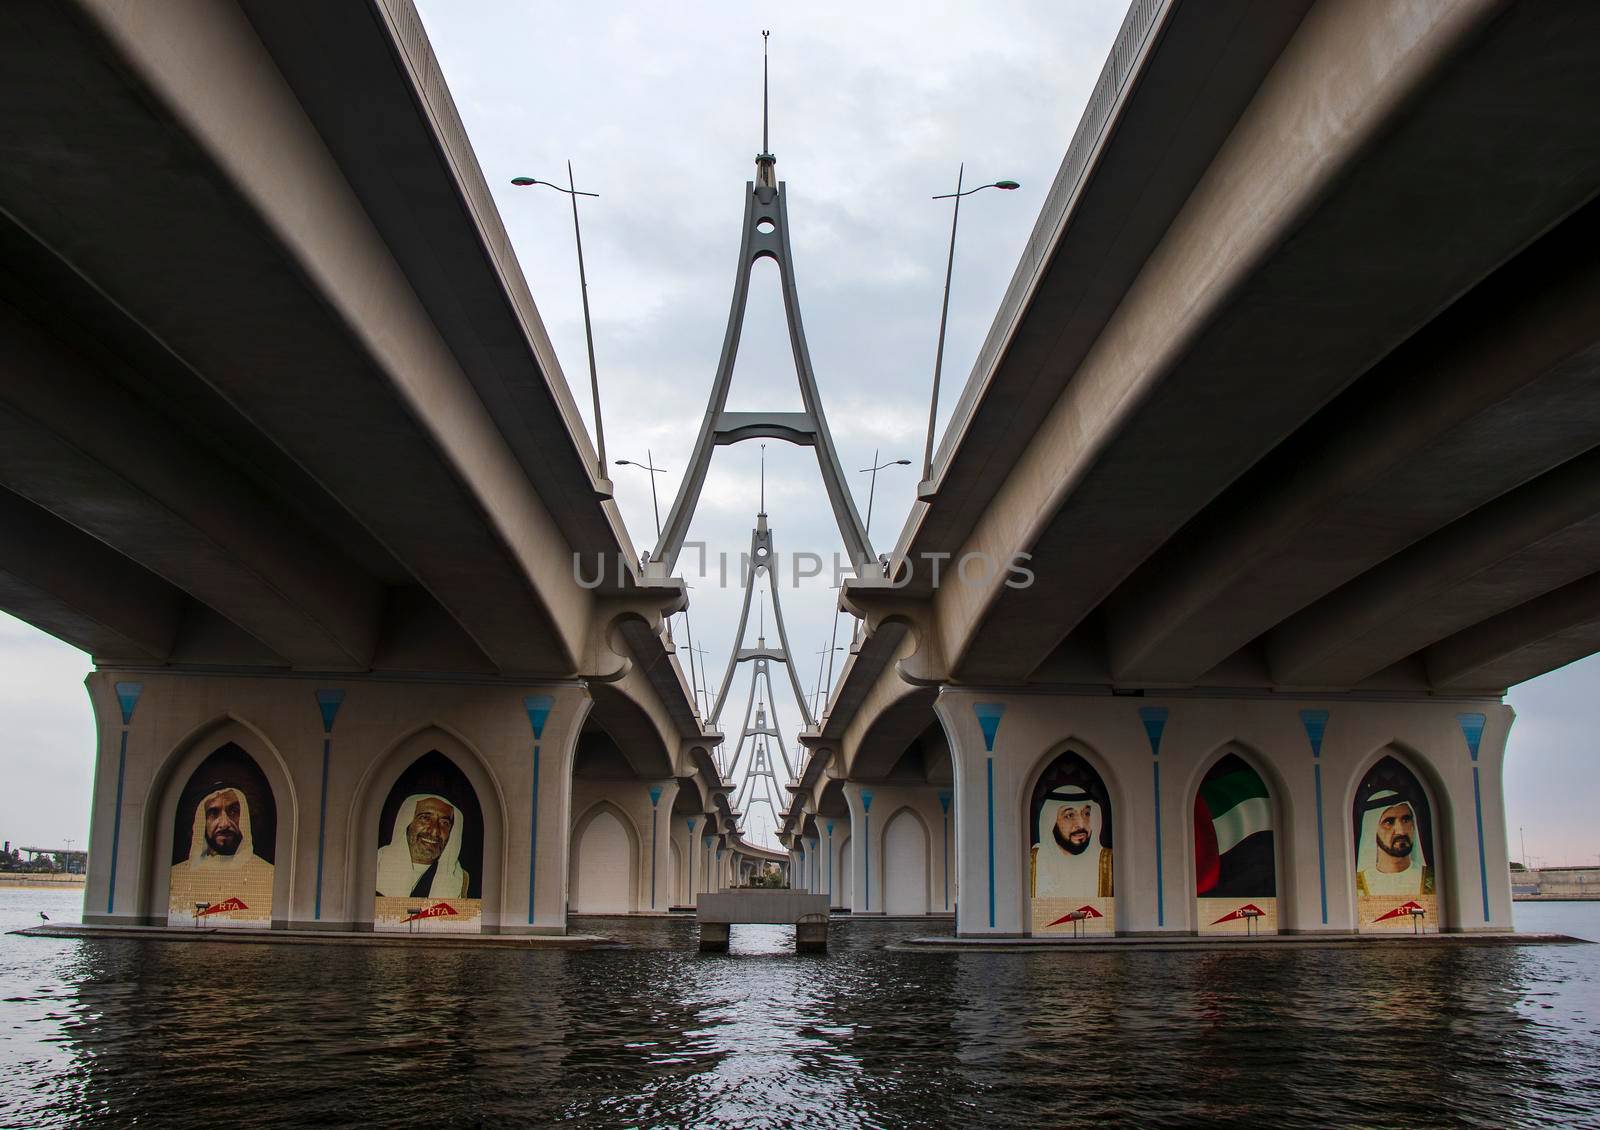 View of a bridge known as Business Bay bridge in Dubai, UAE